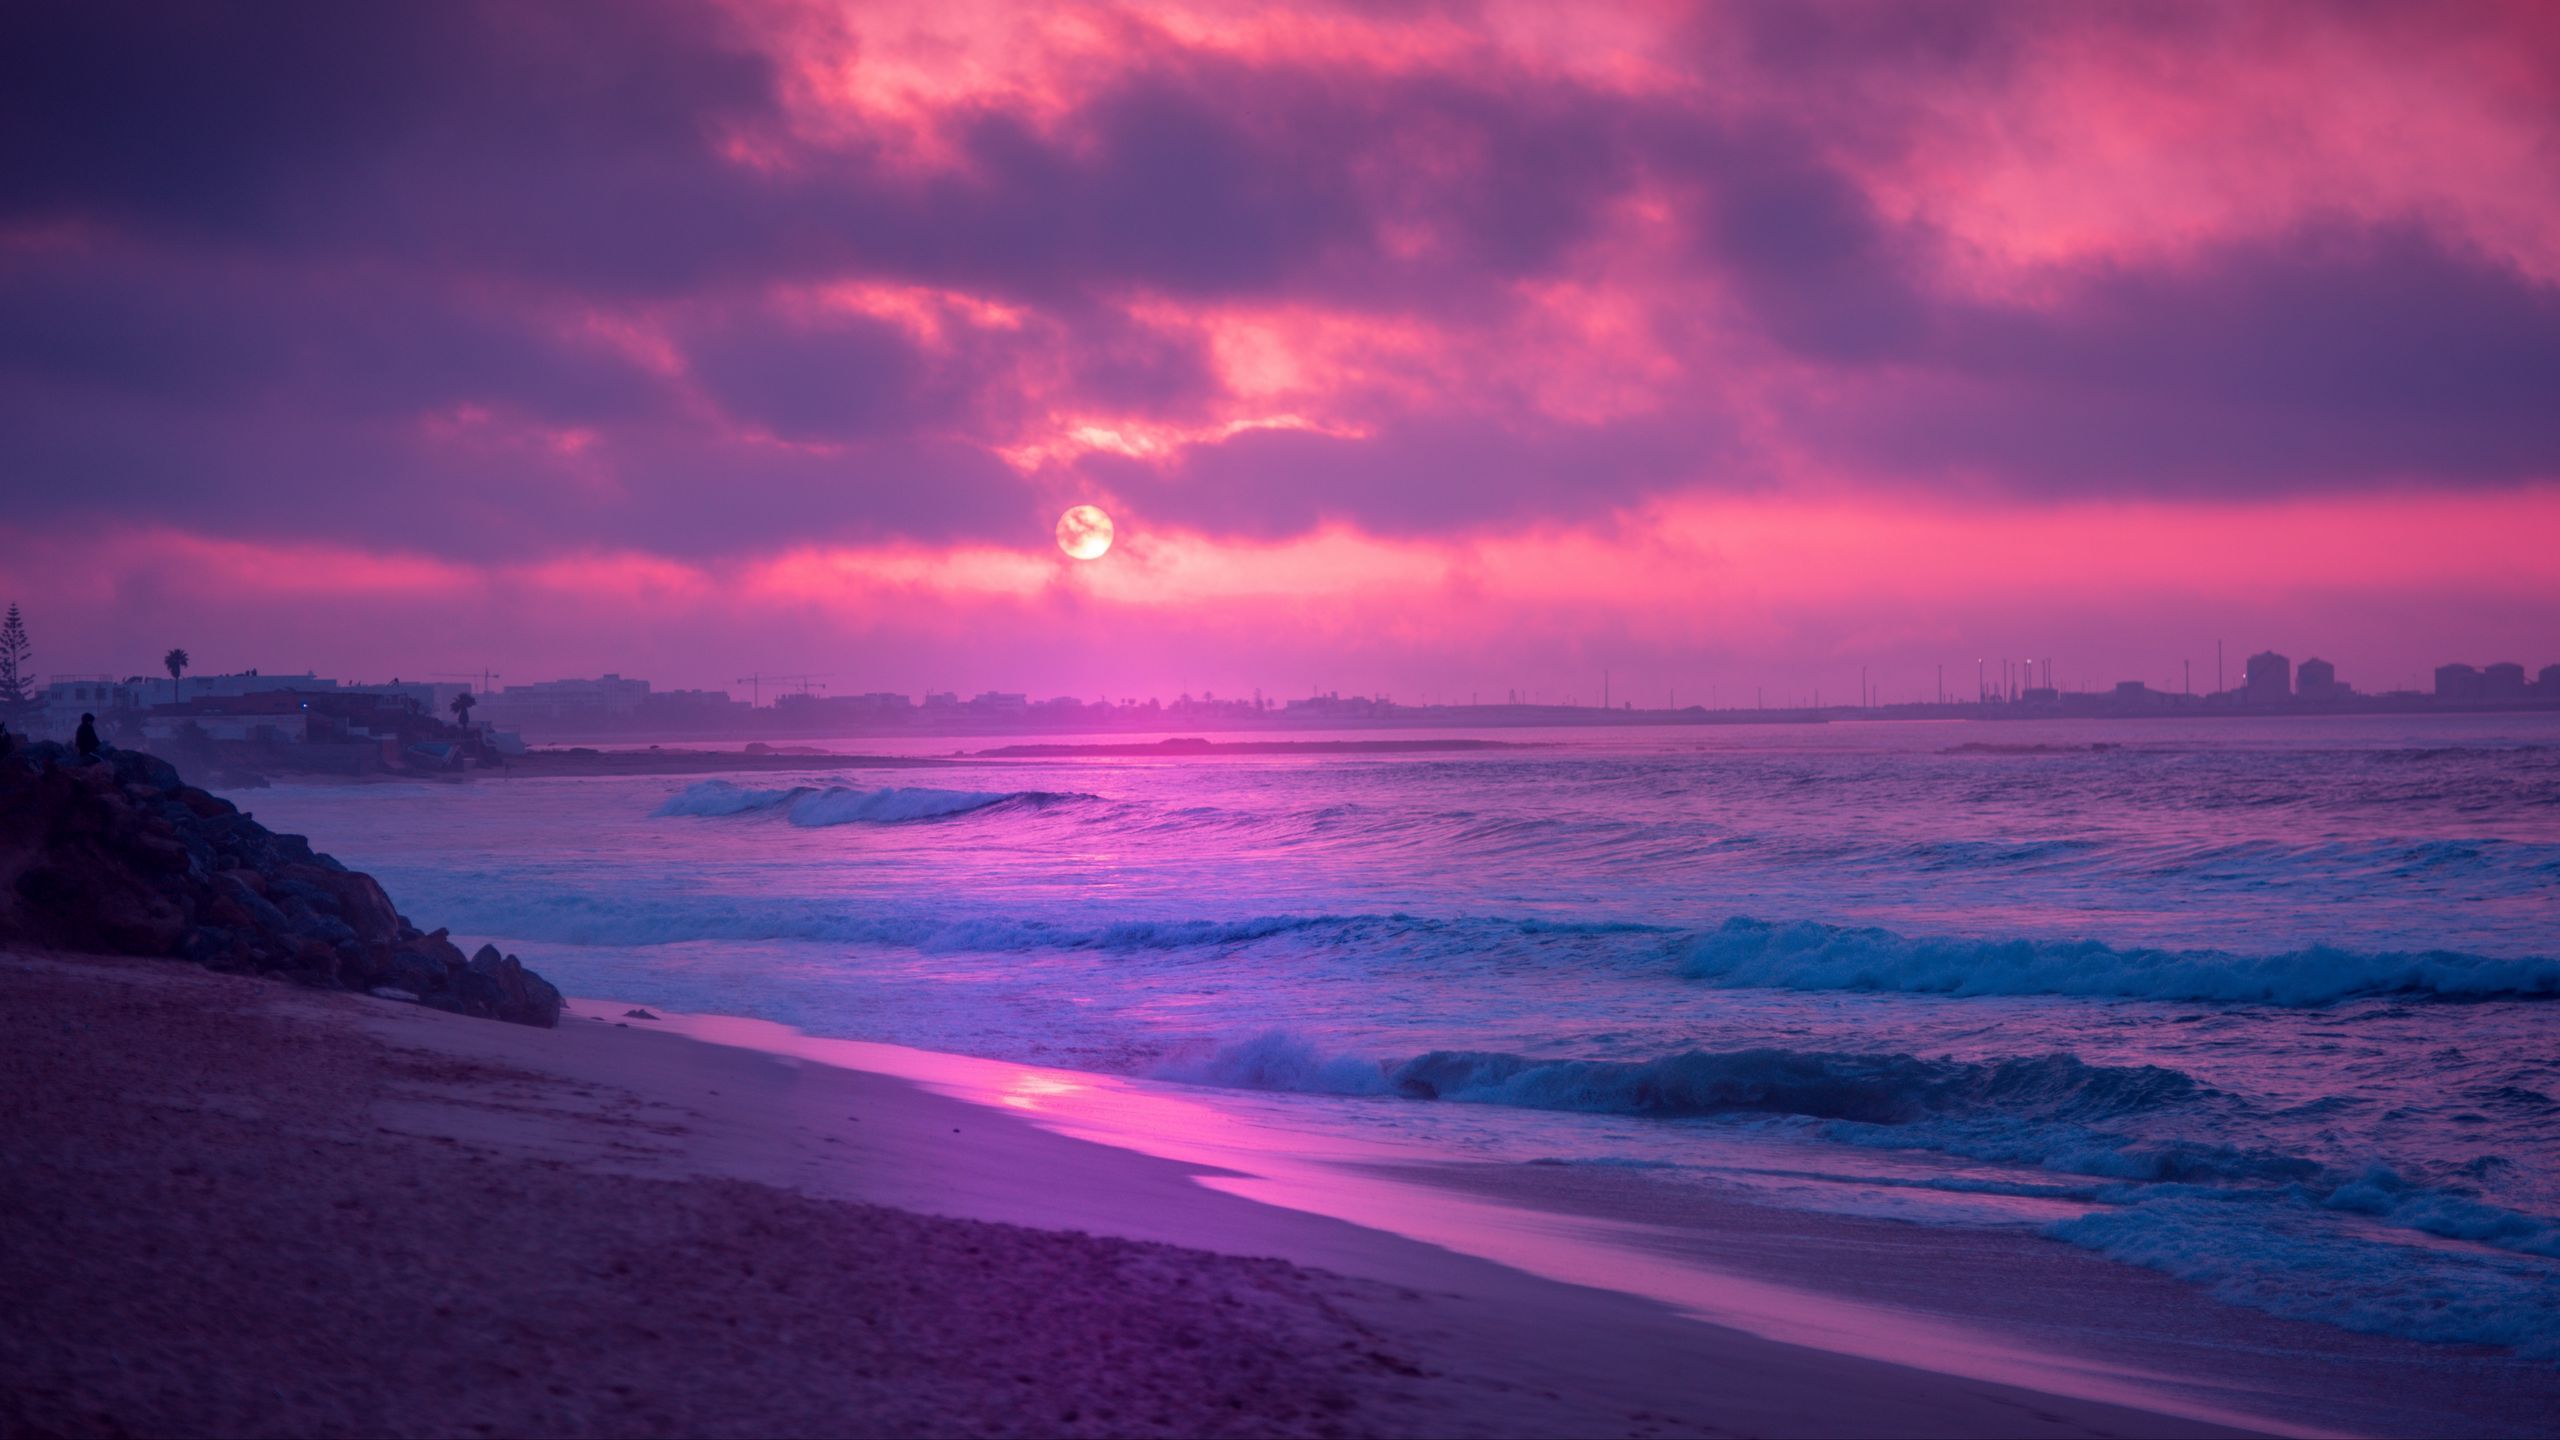 Download wallpaper 2560x1440 sea, sunset, waves, surf, shore, horizon widescreen 16:9 HD background